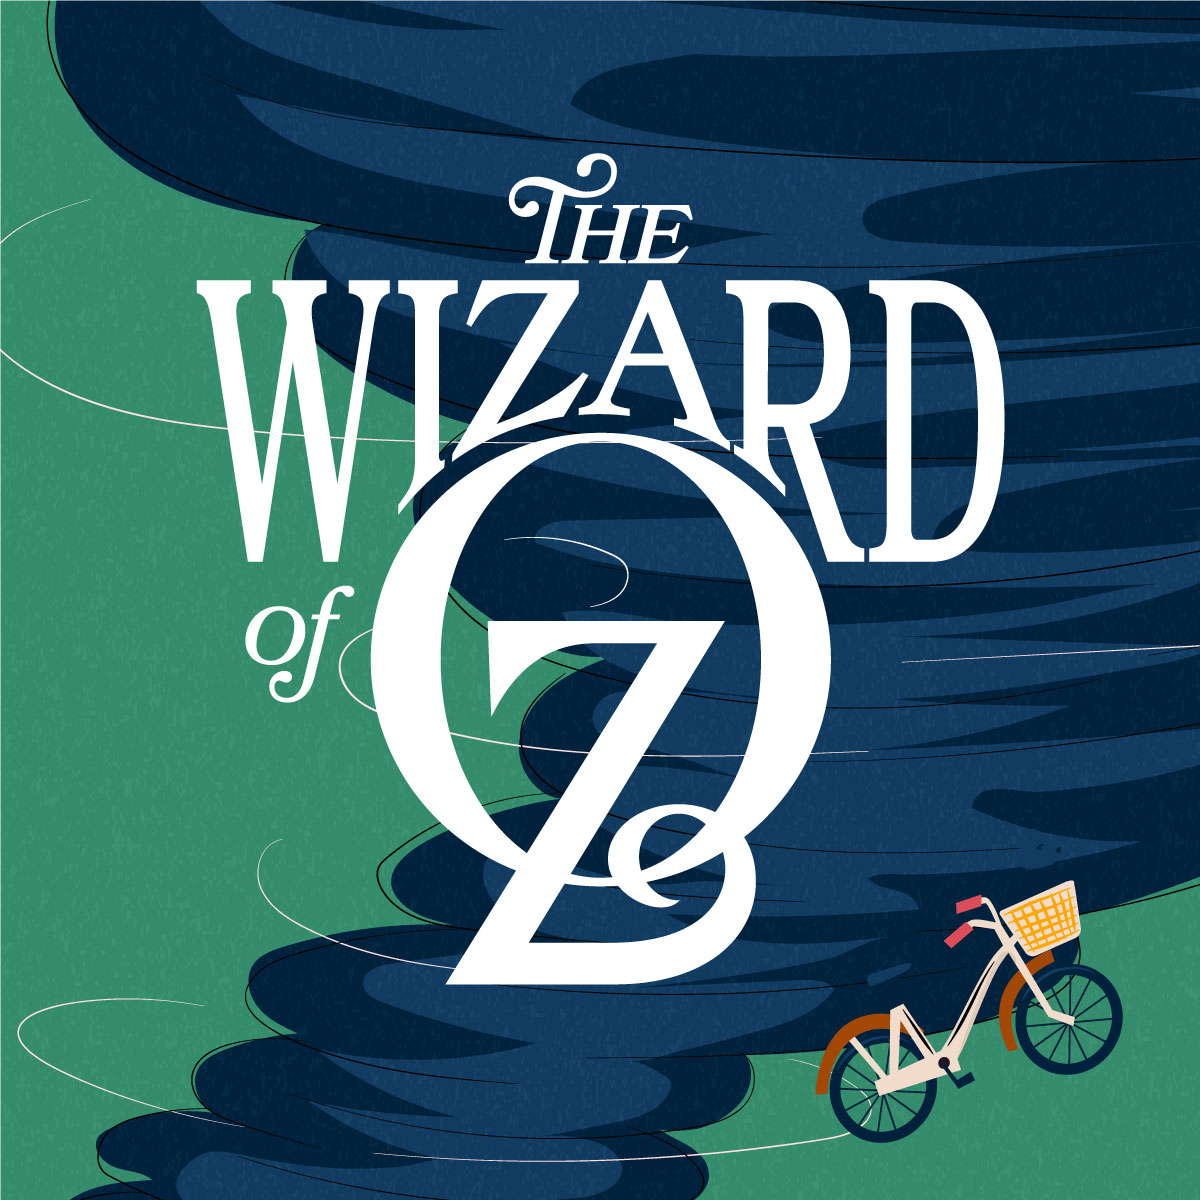 Wizard of Oz Poster Artwork